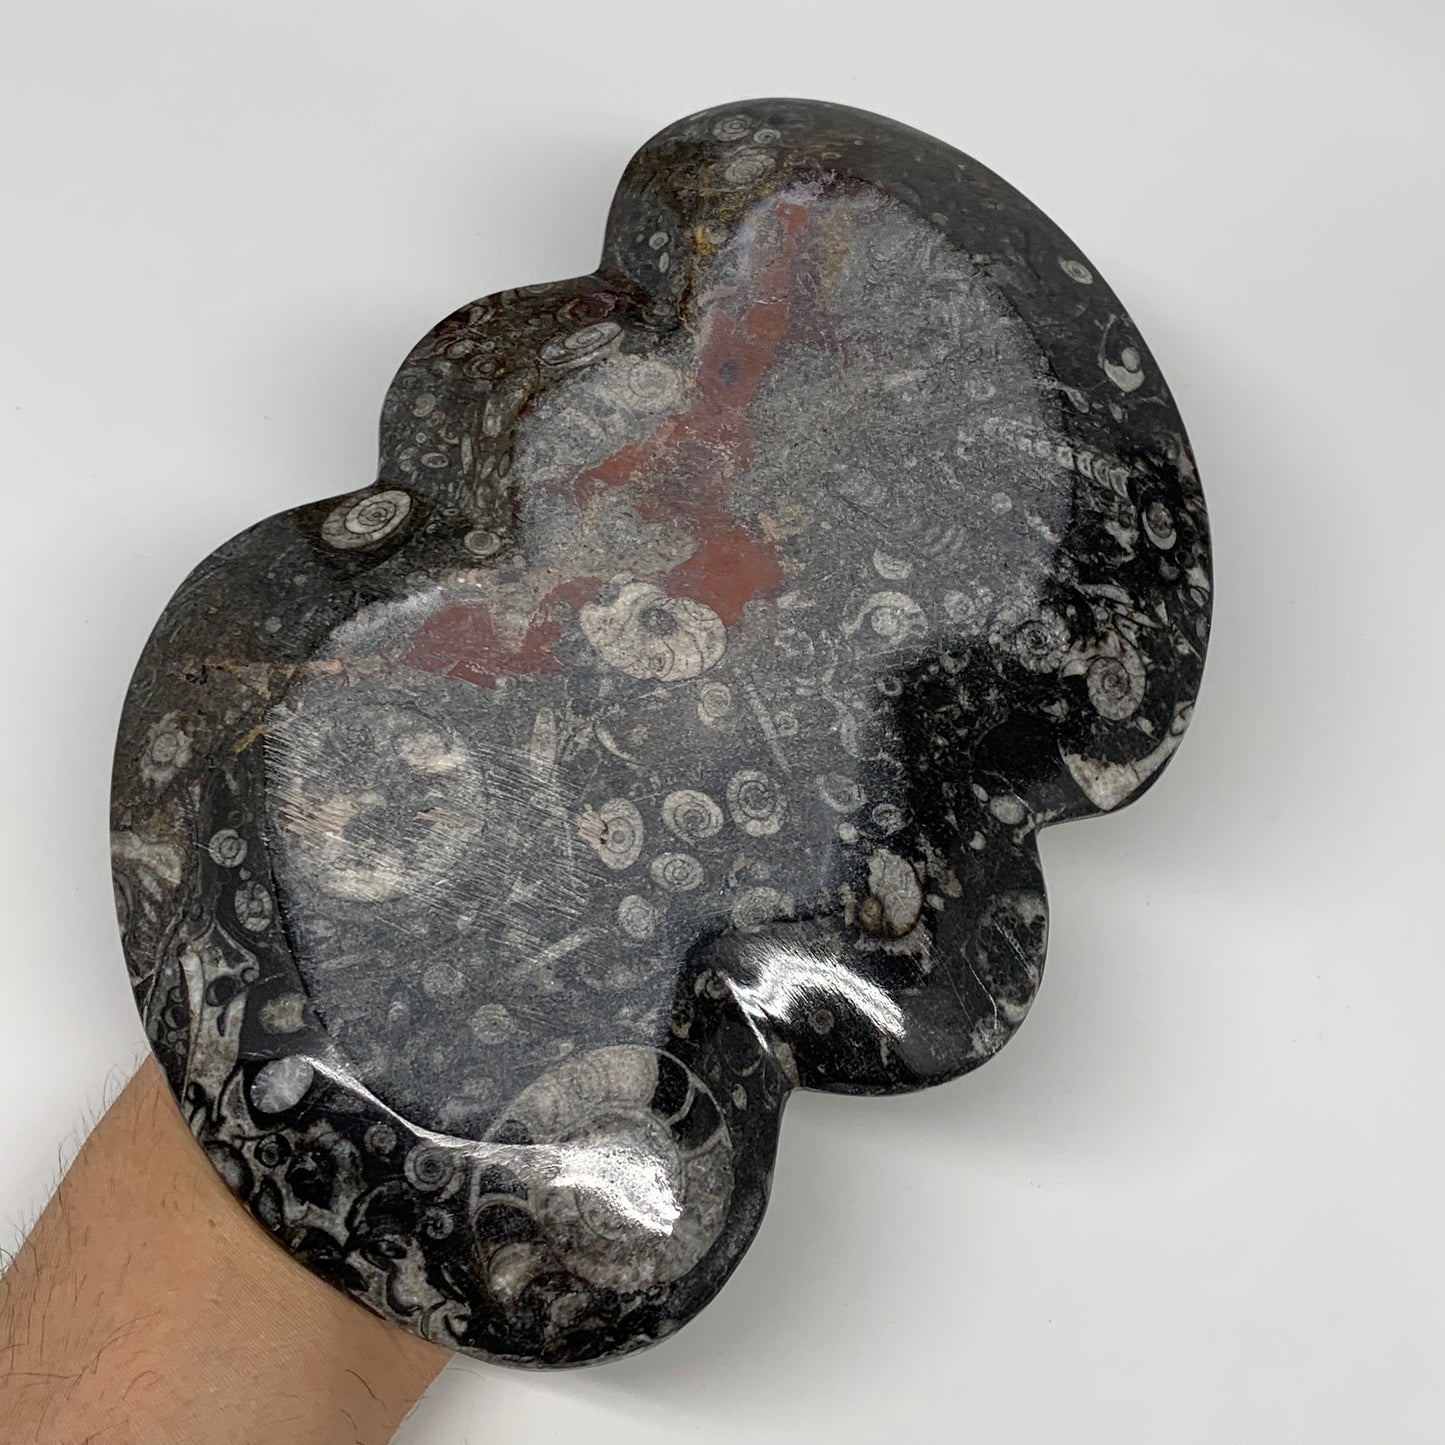 2pcs Set,8.5"x5.5" Double Heart Fossils Orthoceras Ammonite Bowls @Morocco,B8517